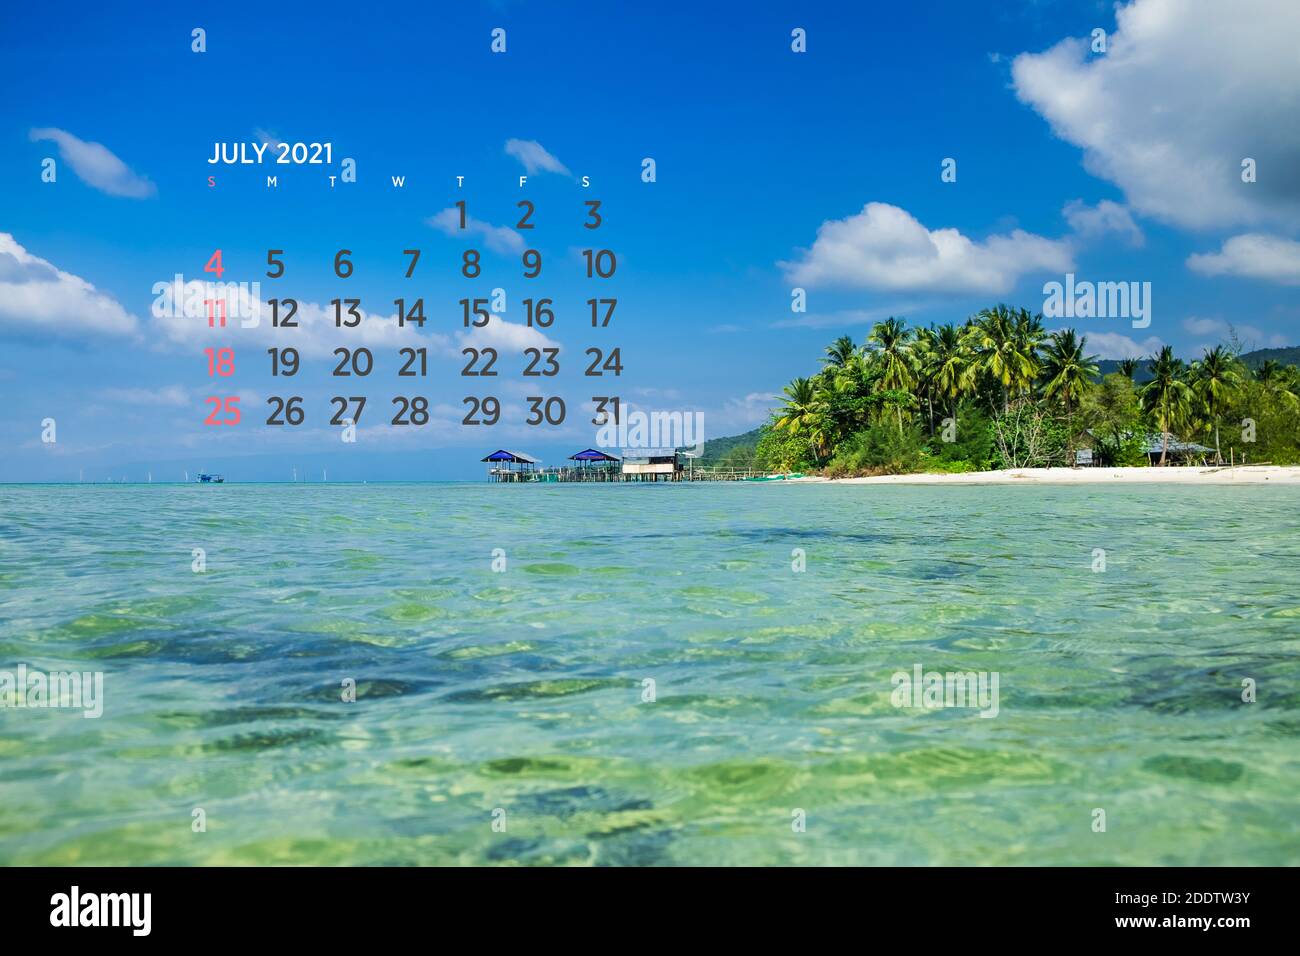 Calendario Julio 2021. Mar, océano, playa, tropical, tema de la naturaleza. A2. 60 x 40 cm. 15.75 x 23.62 pulgadas Foto de stock